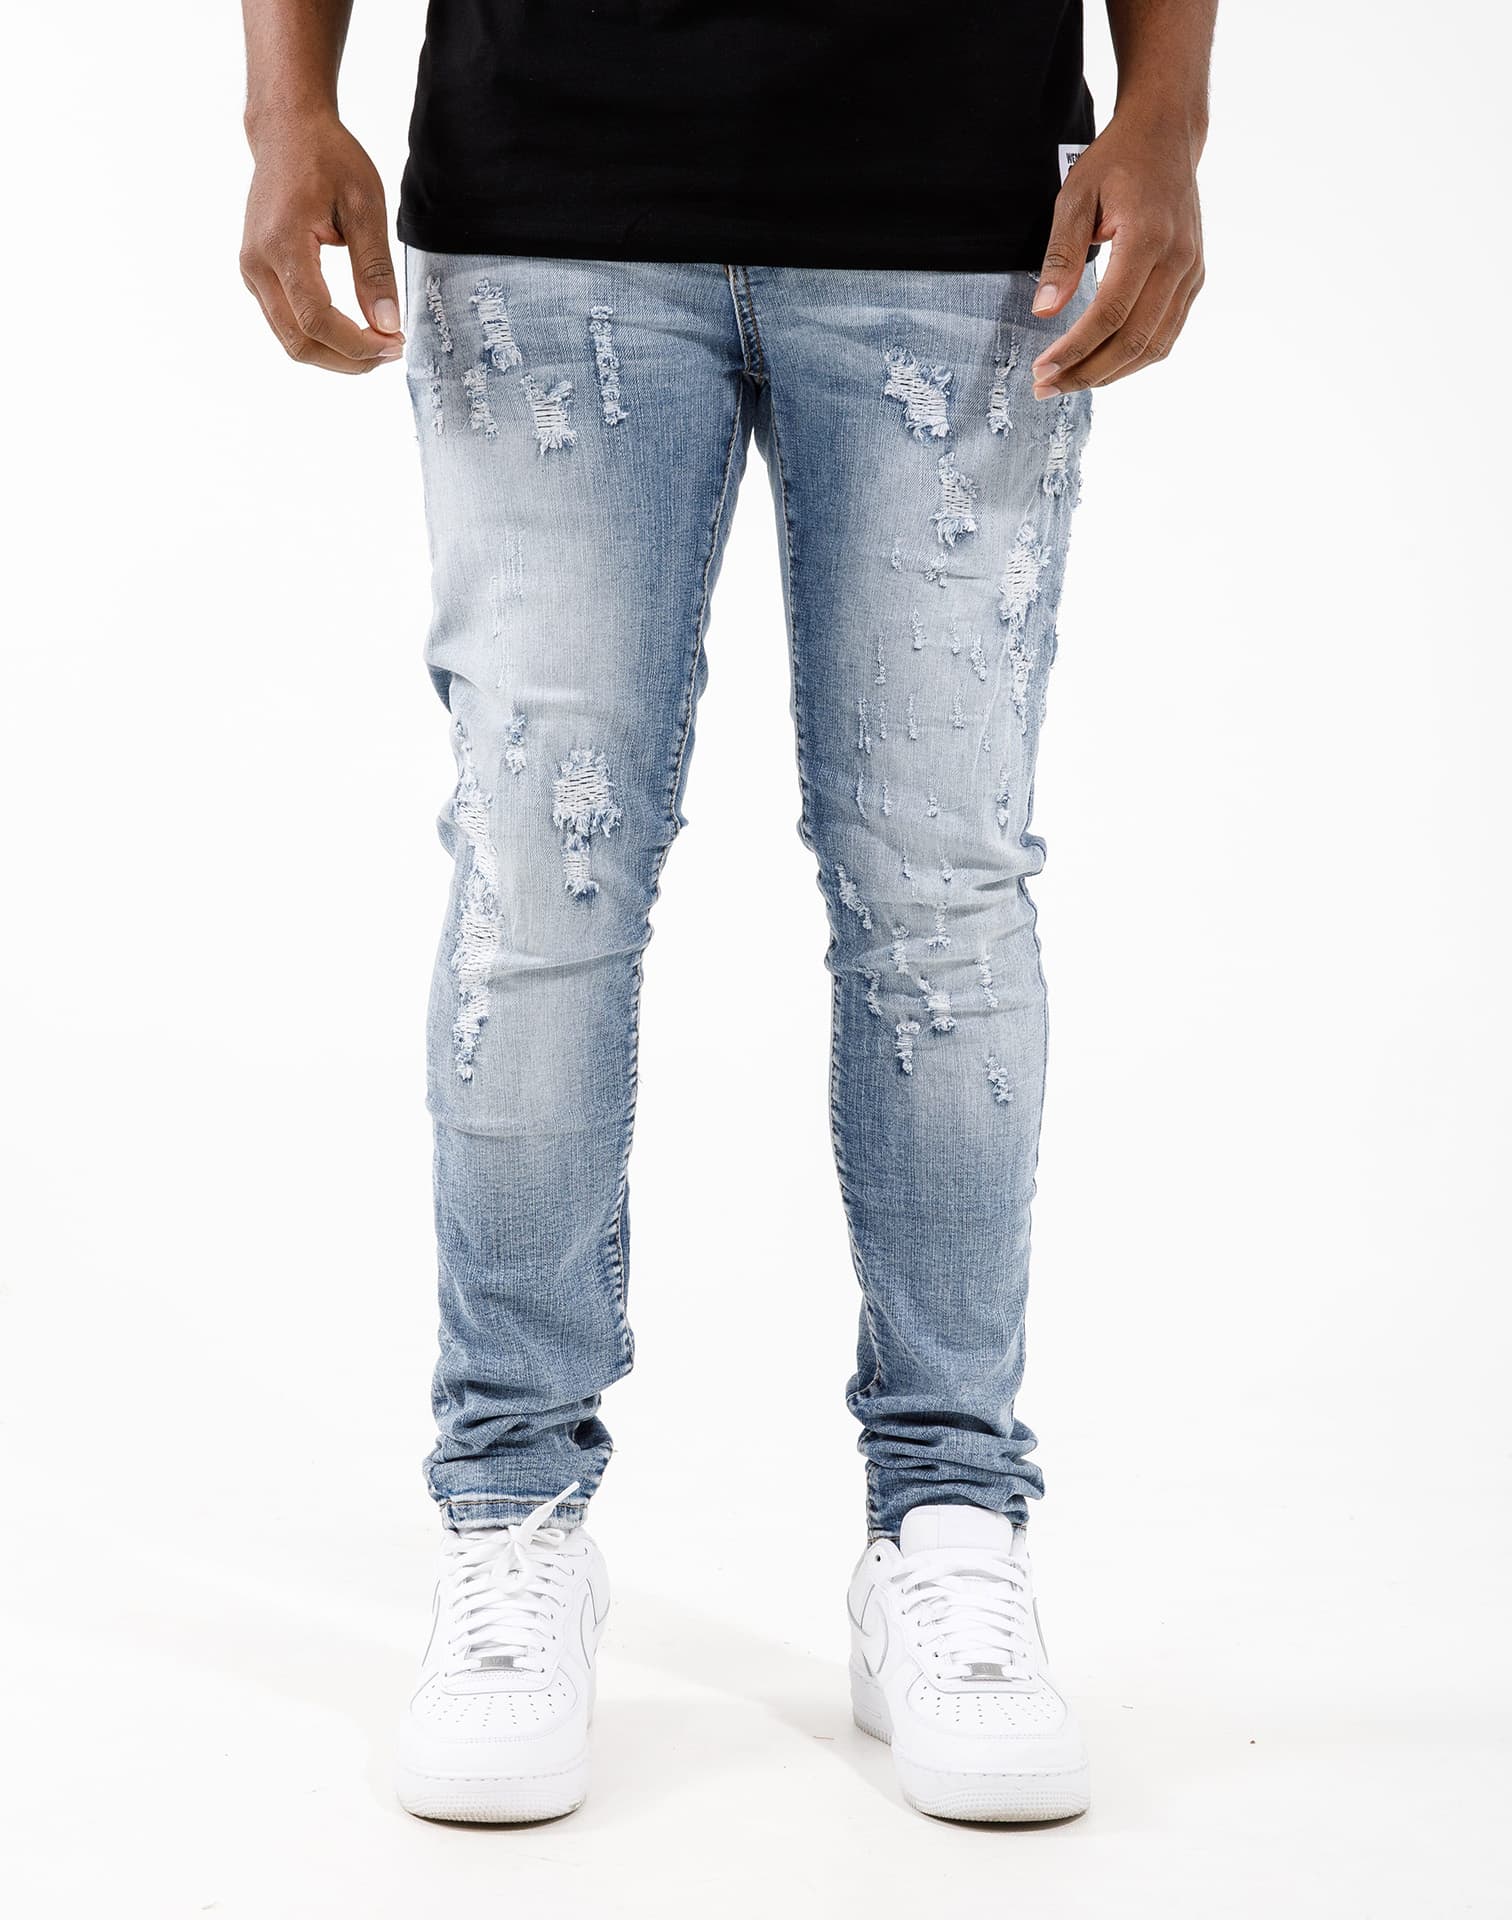 United Cotes Industrial Indigo Jeans  - Blue - Size: 42